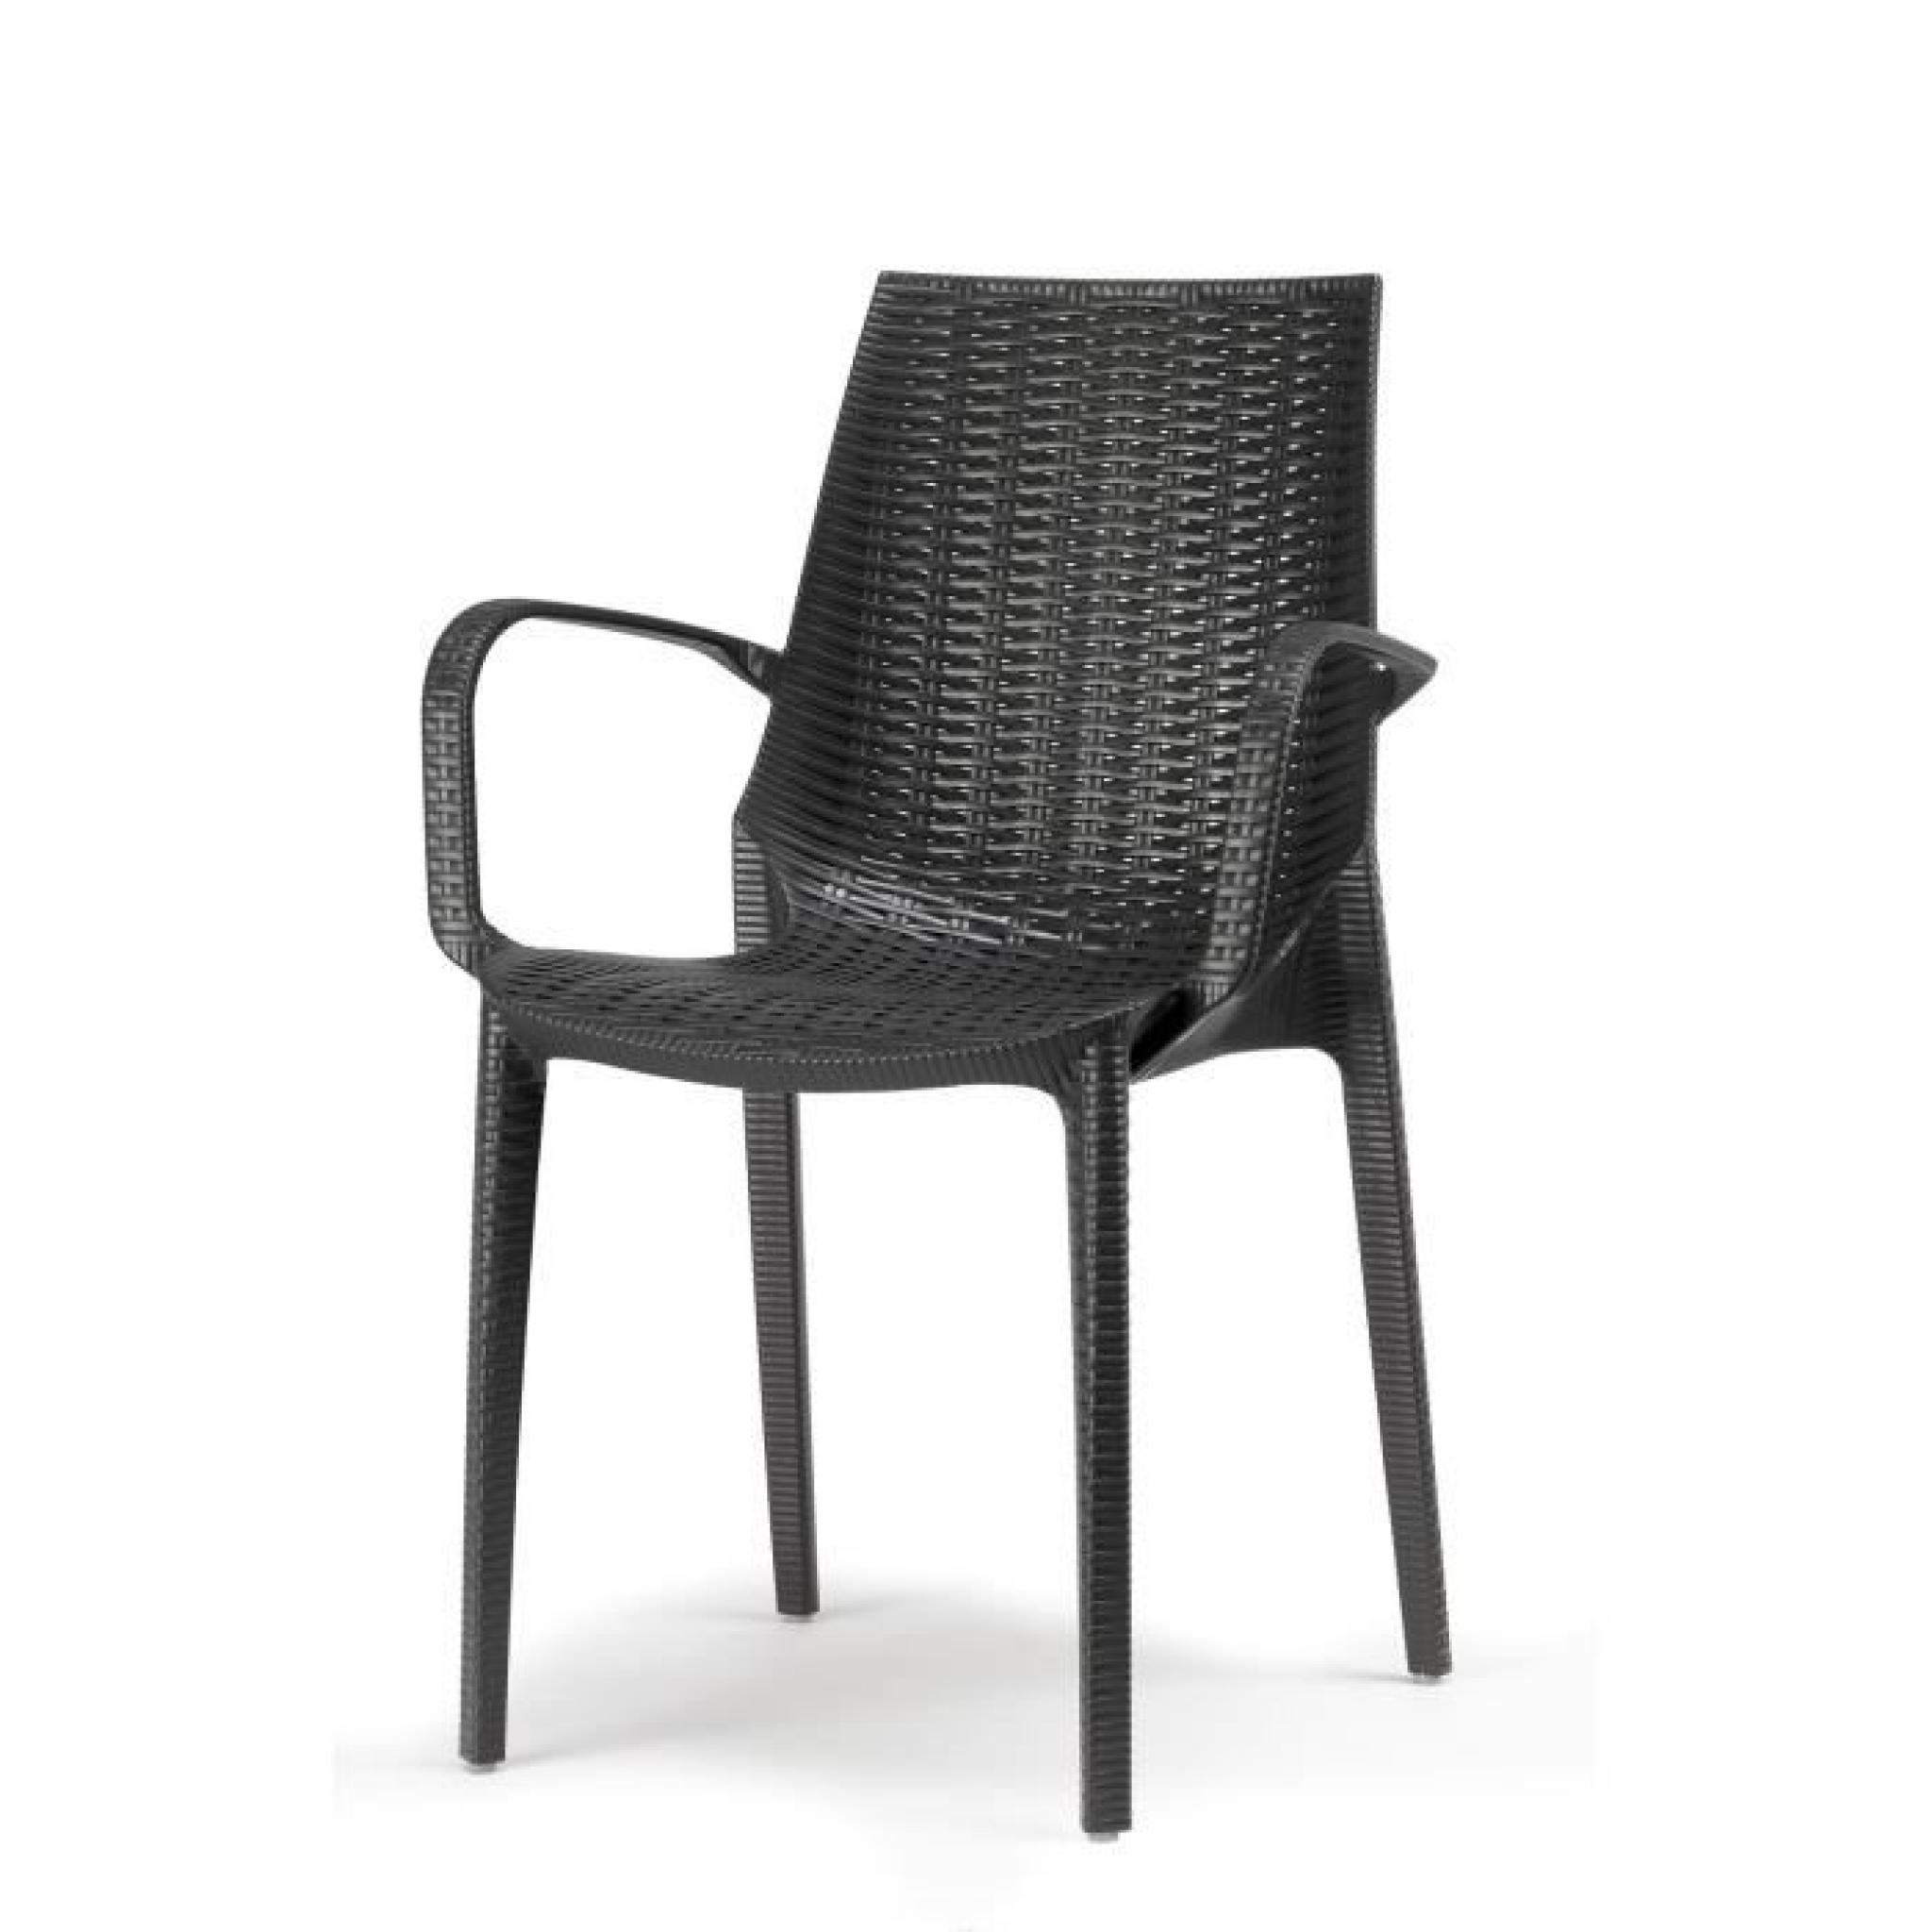 Chaise tissee grise anthracite design - LUCREZIA avec accoudoirs grise antracite - deco